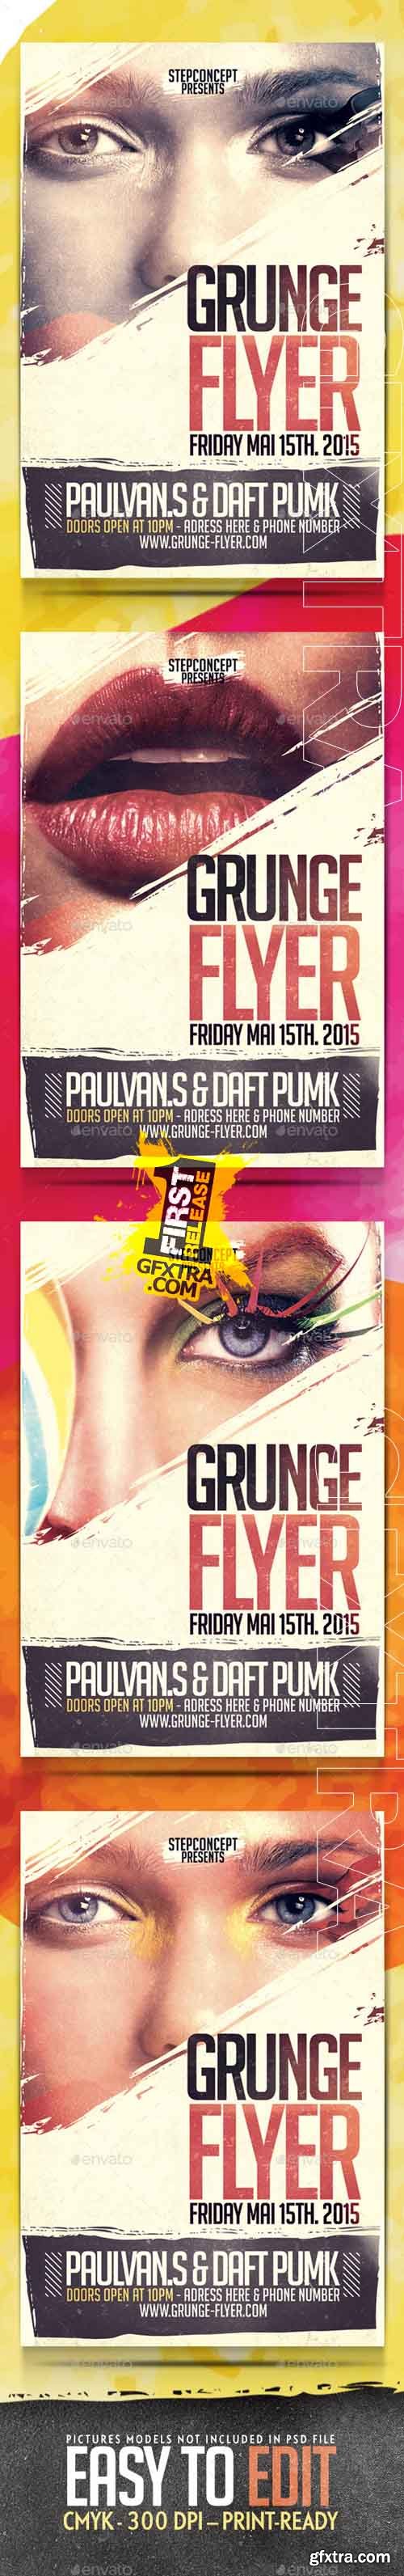 GR - Grunge Flyer Template 11996344